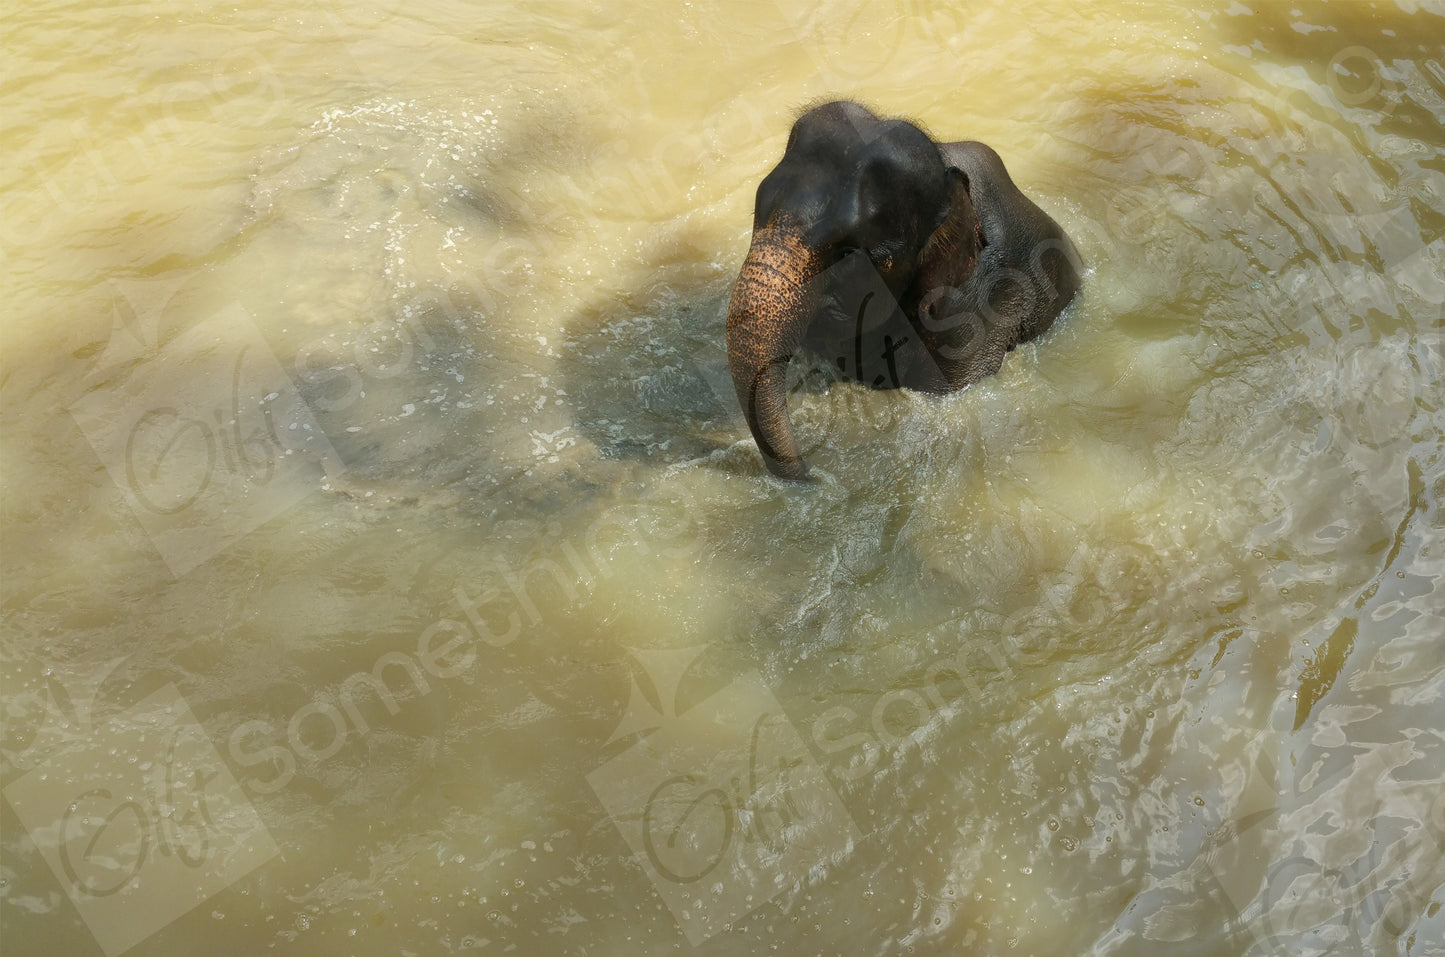 Elephant, Thailand